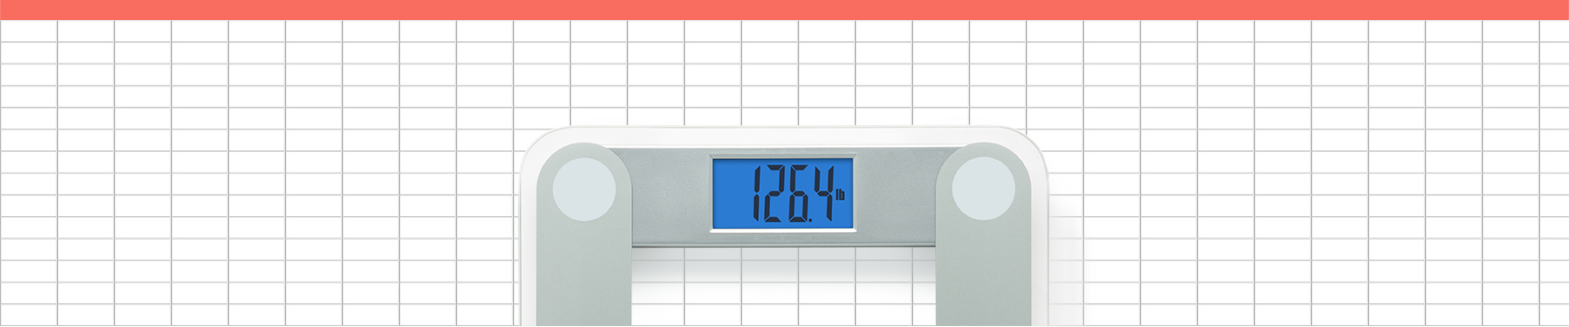 Eatsmart Esbs-64 Digital Bathroom Scale, High Precision, Clear Glass Scale for